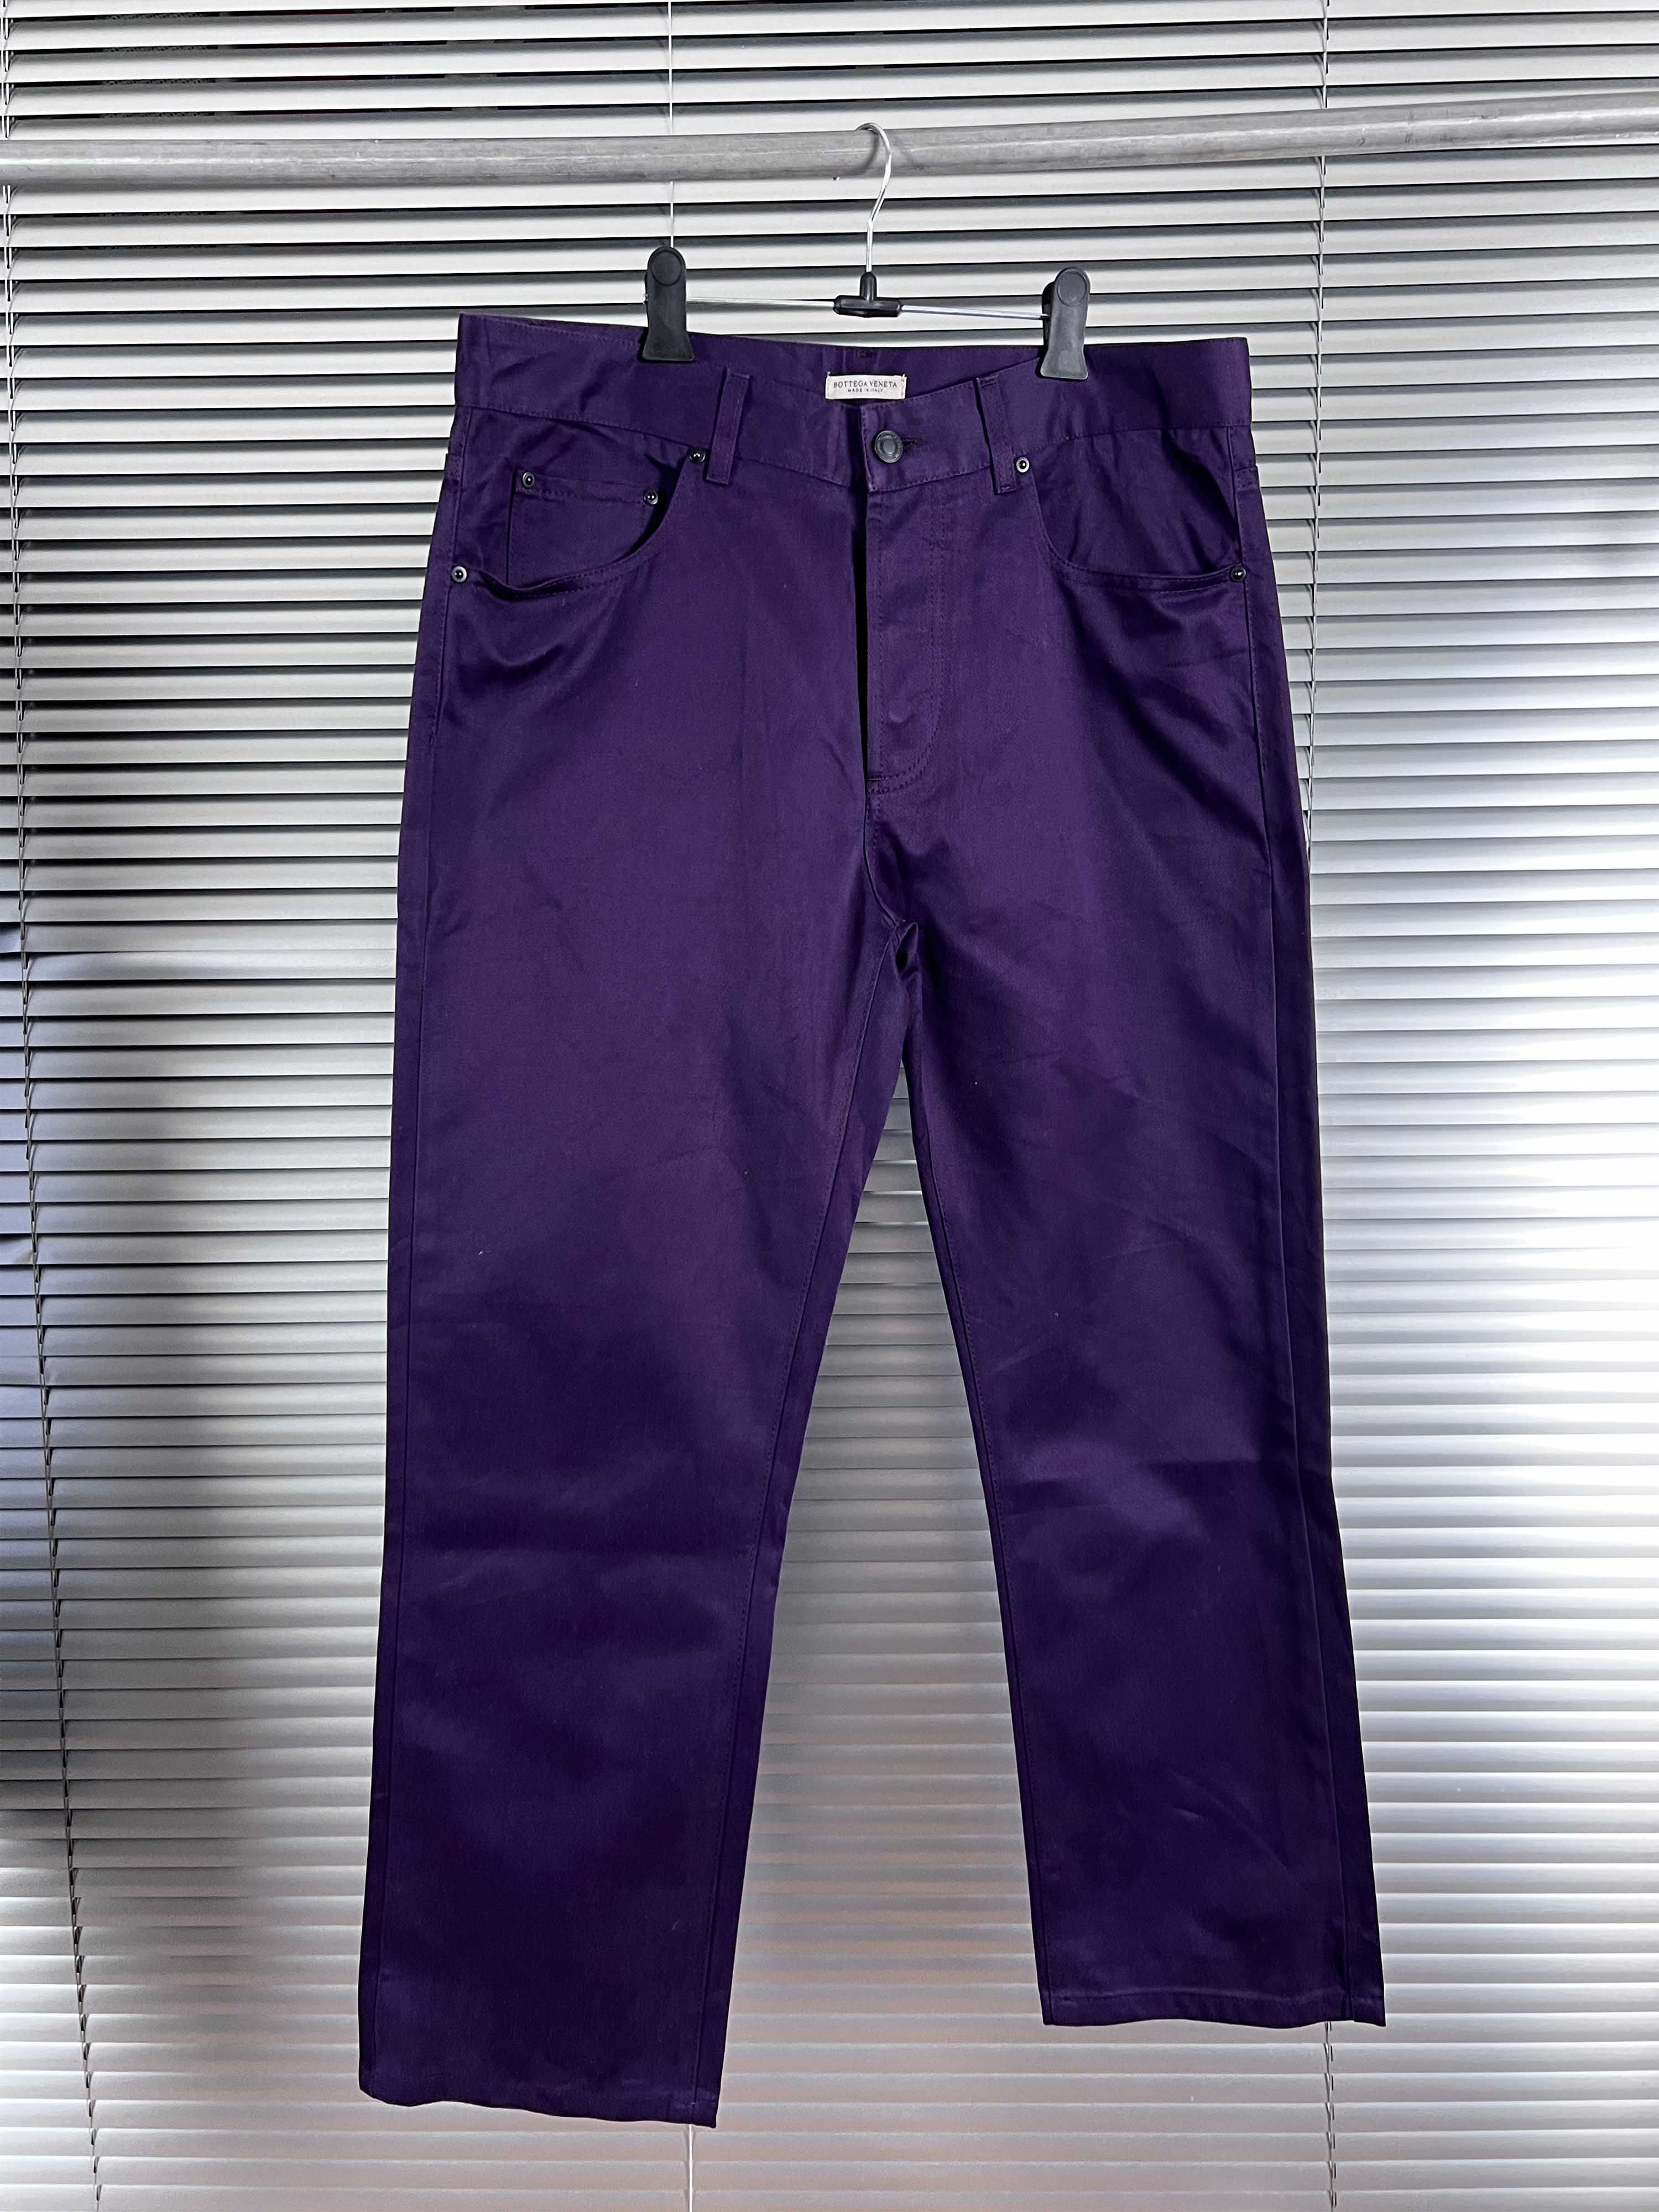 BOTTEGA VENETTA purple chino pants